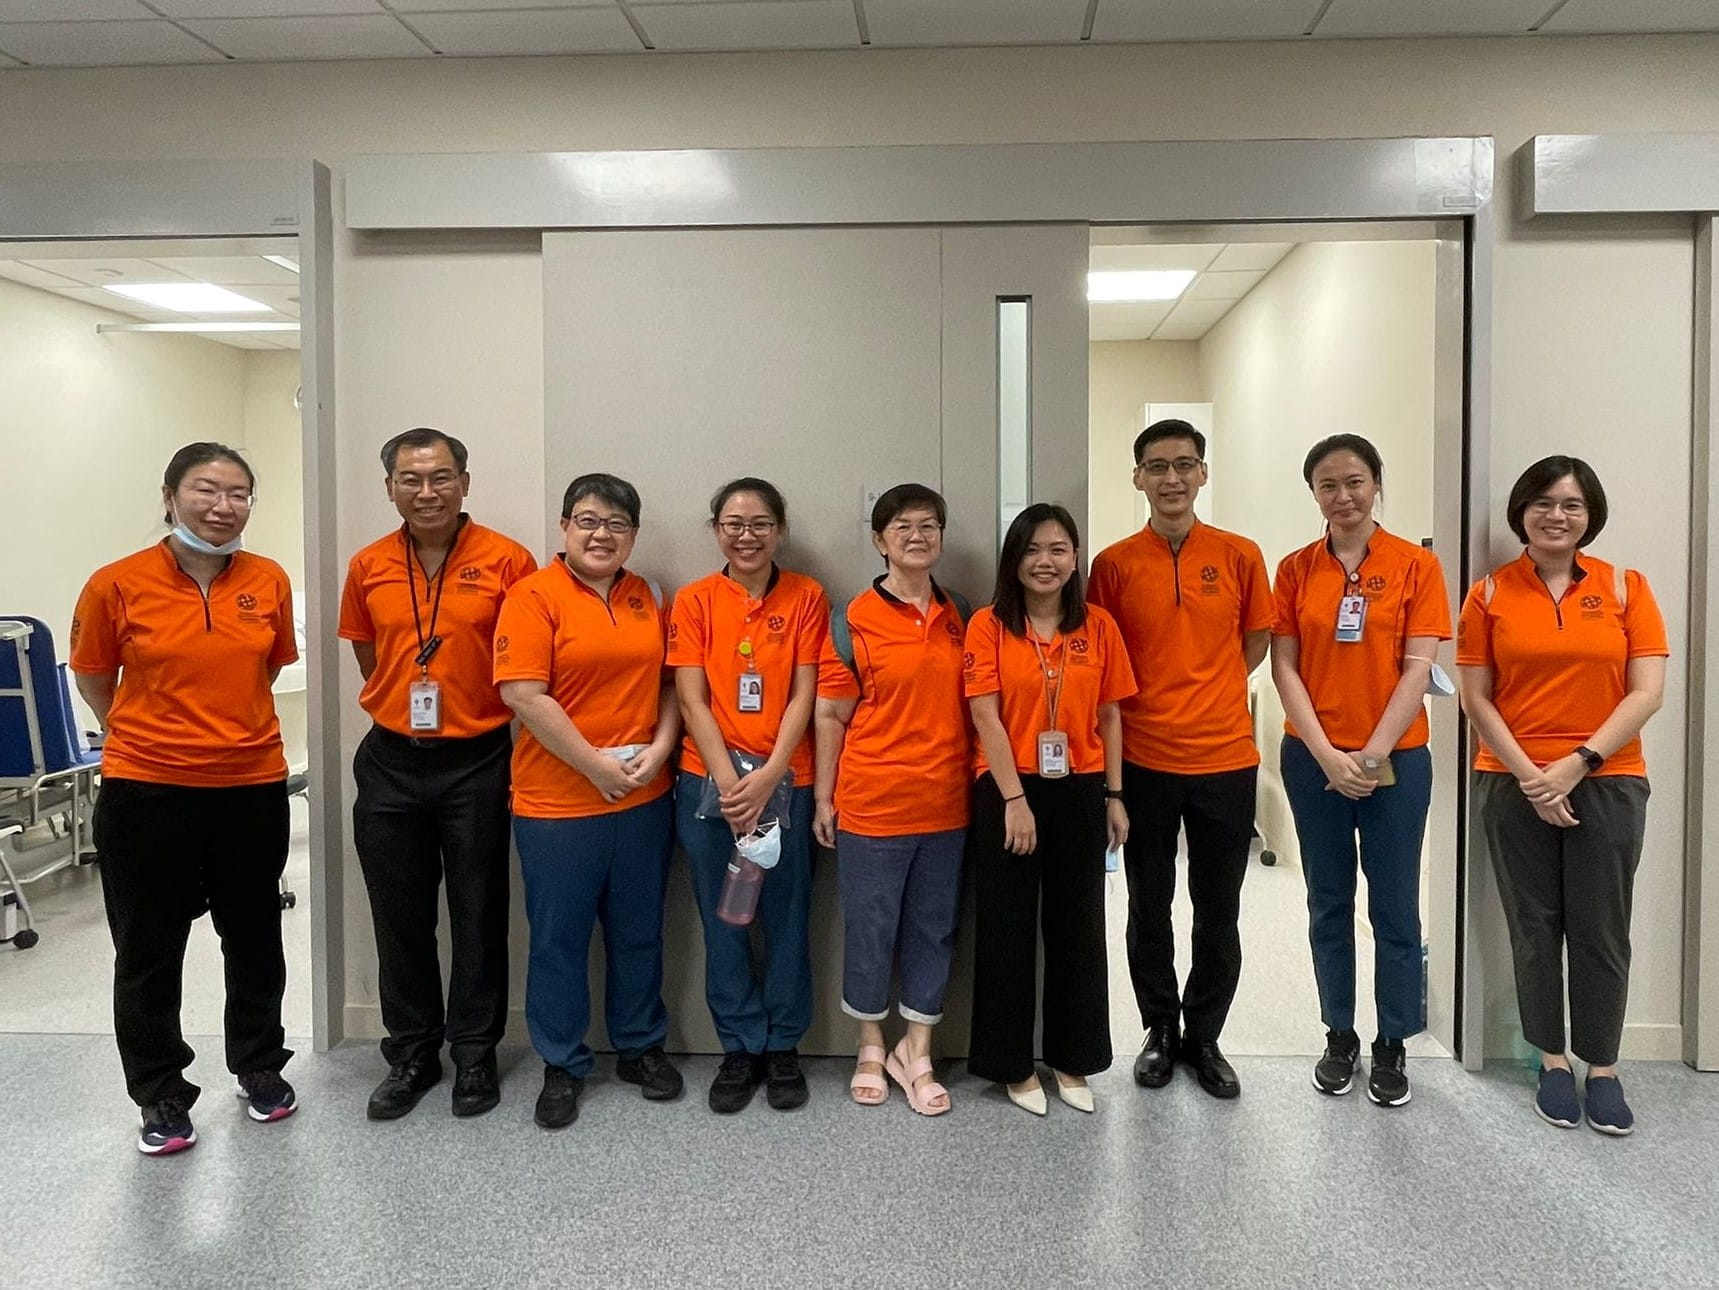 Group photo of volunteers at the Lee Kong Chian School of Medicine